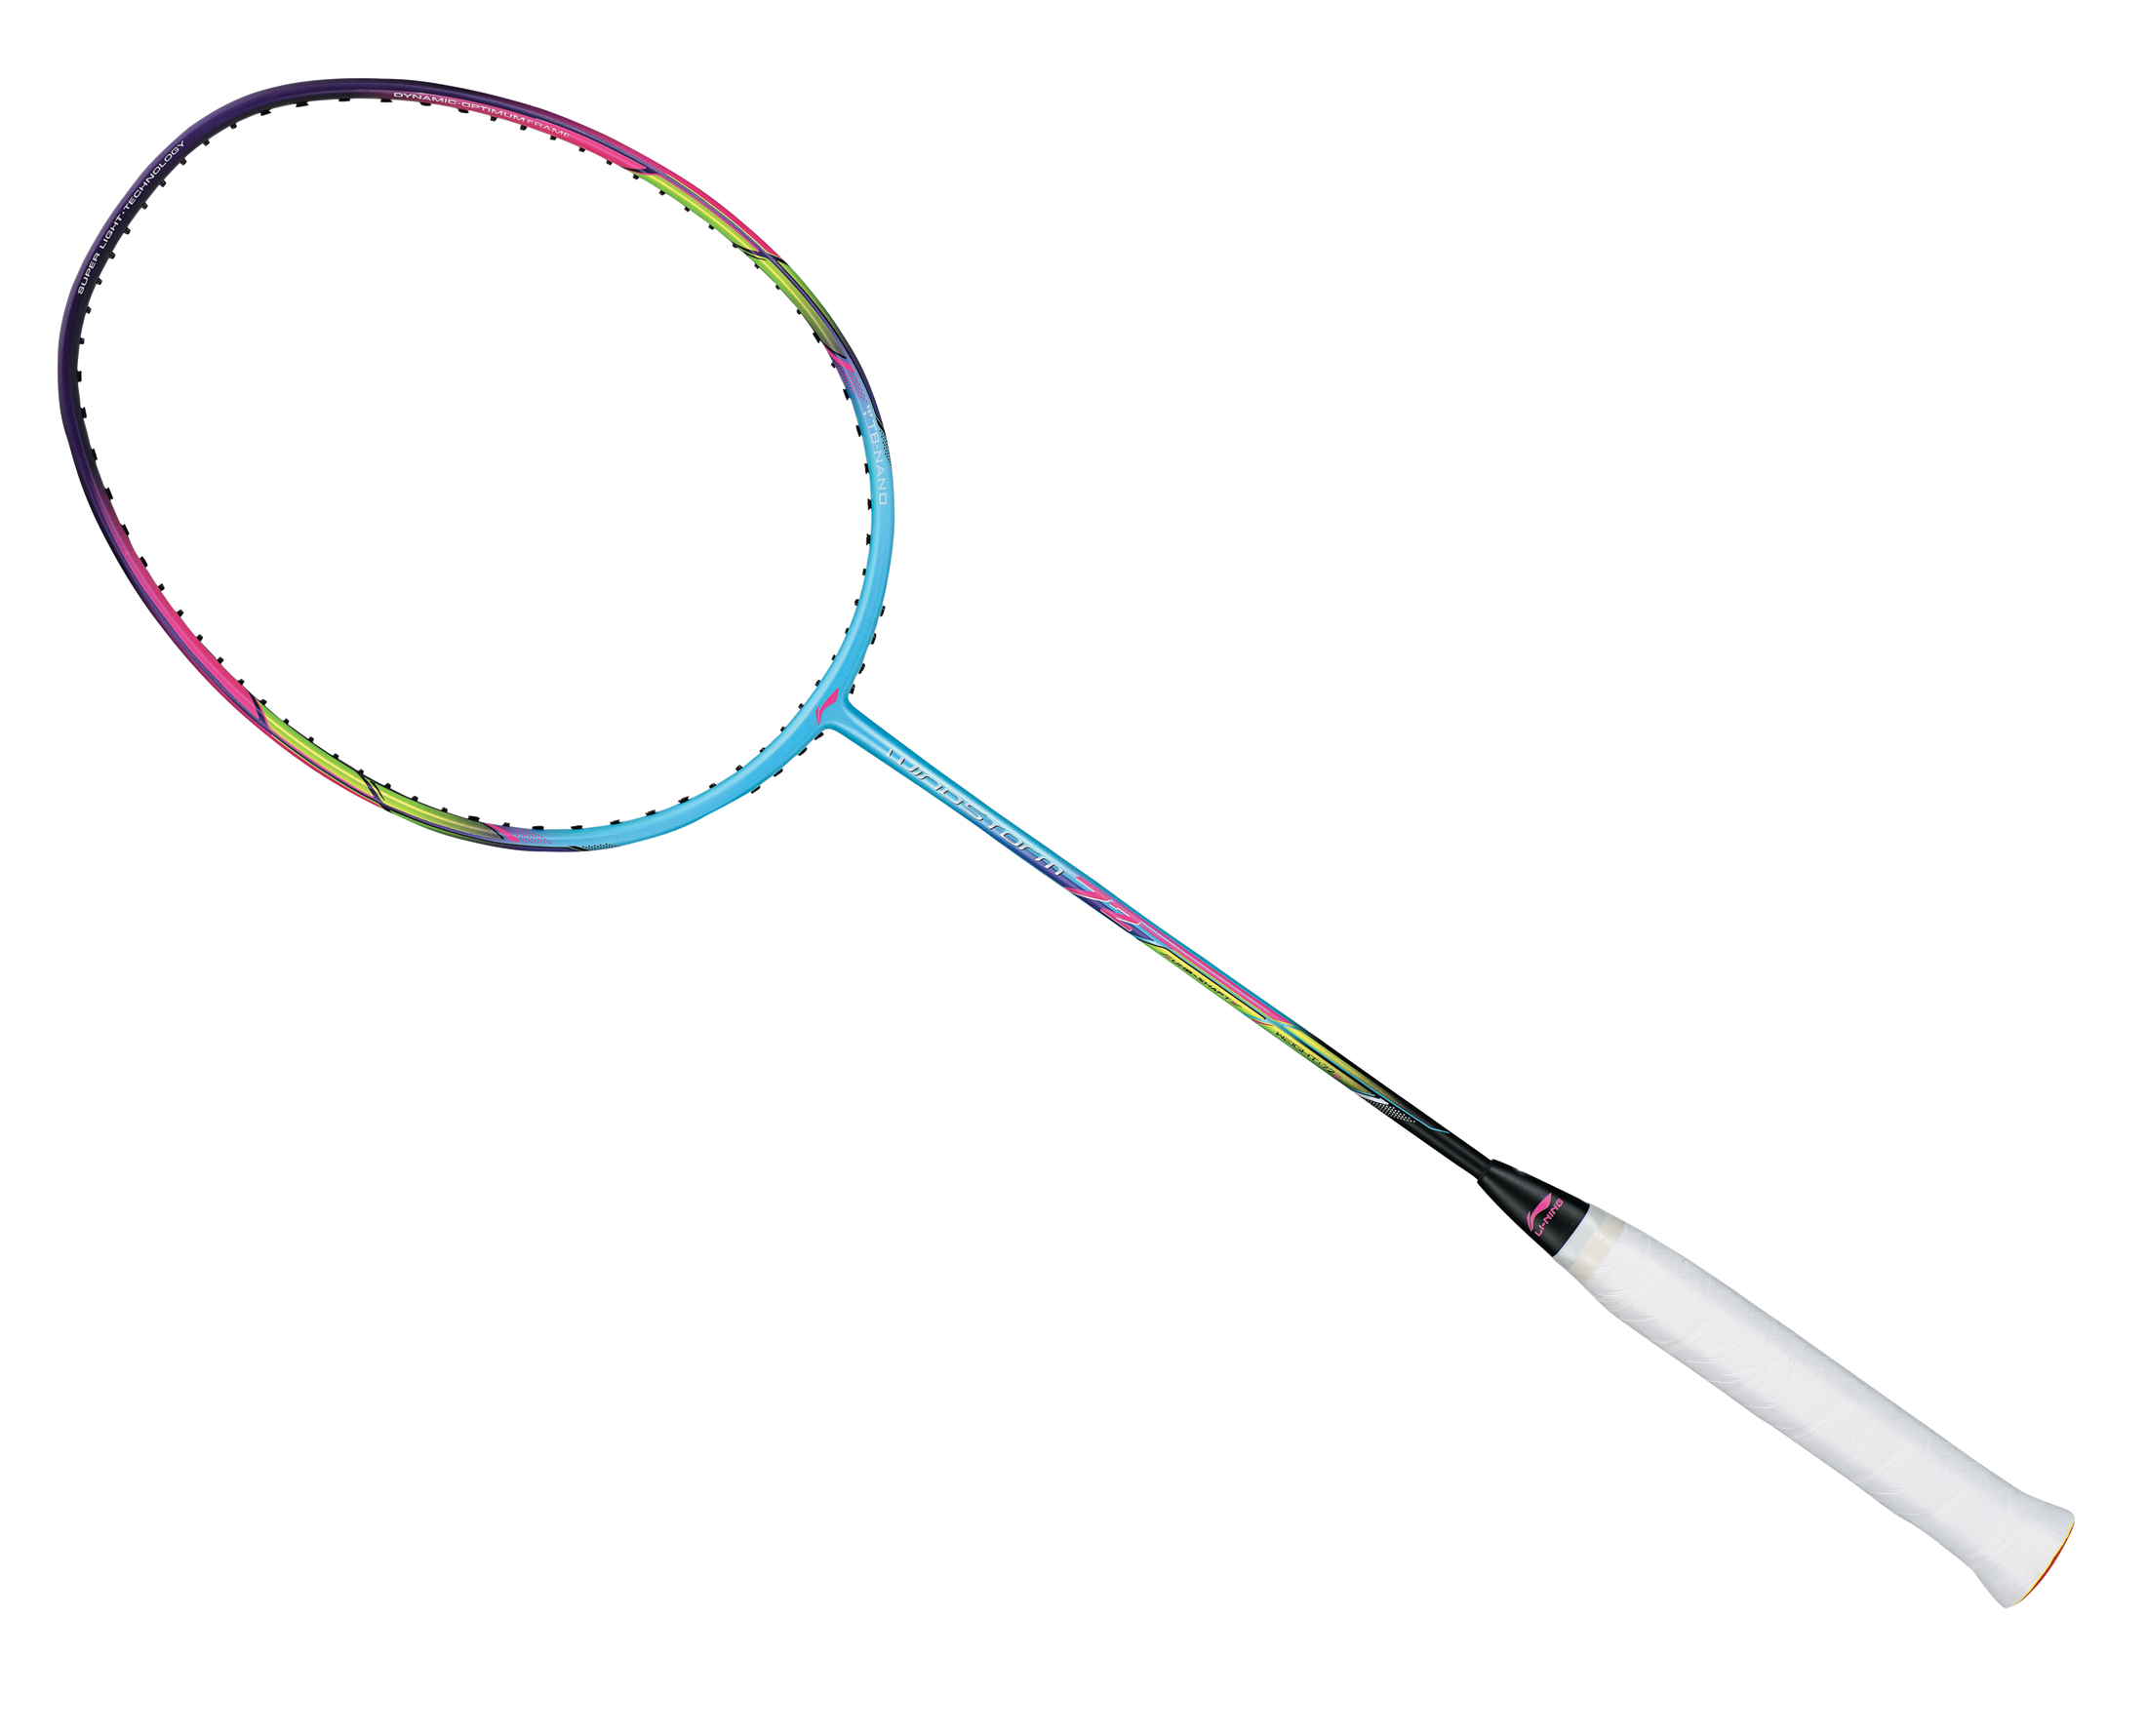 Badminton racket photo